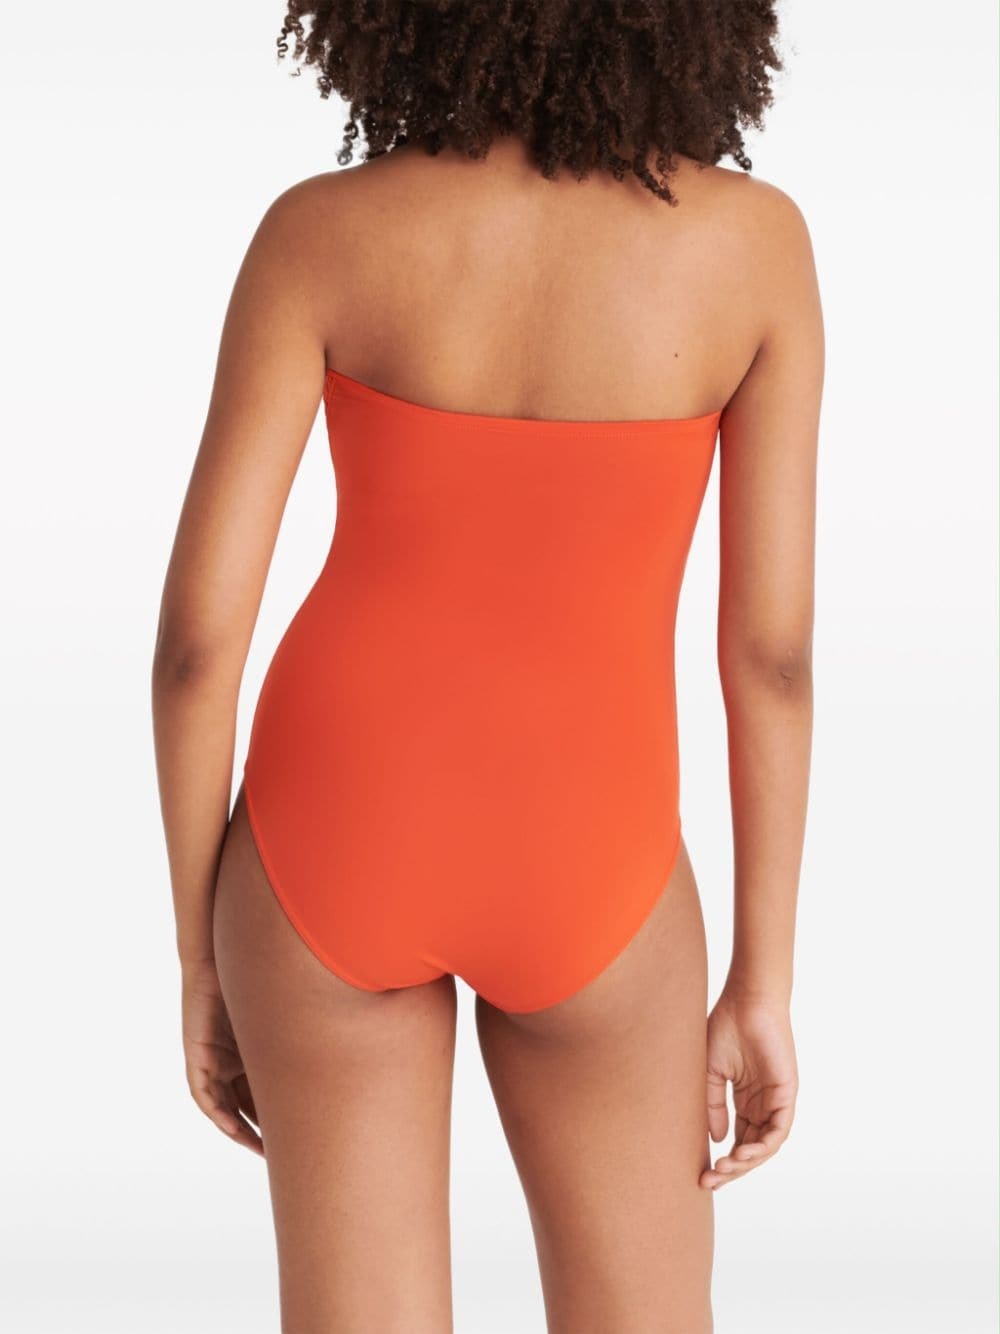 CassiopÃ©e strapless swimsuit - 5